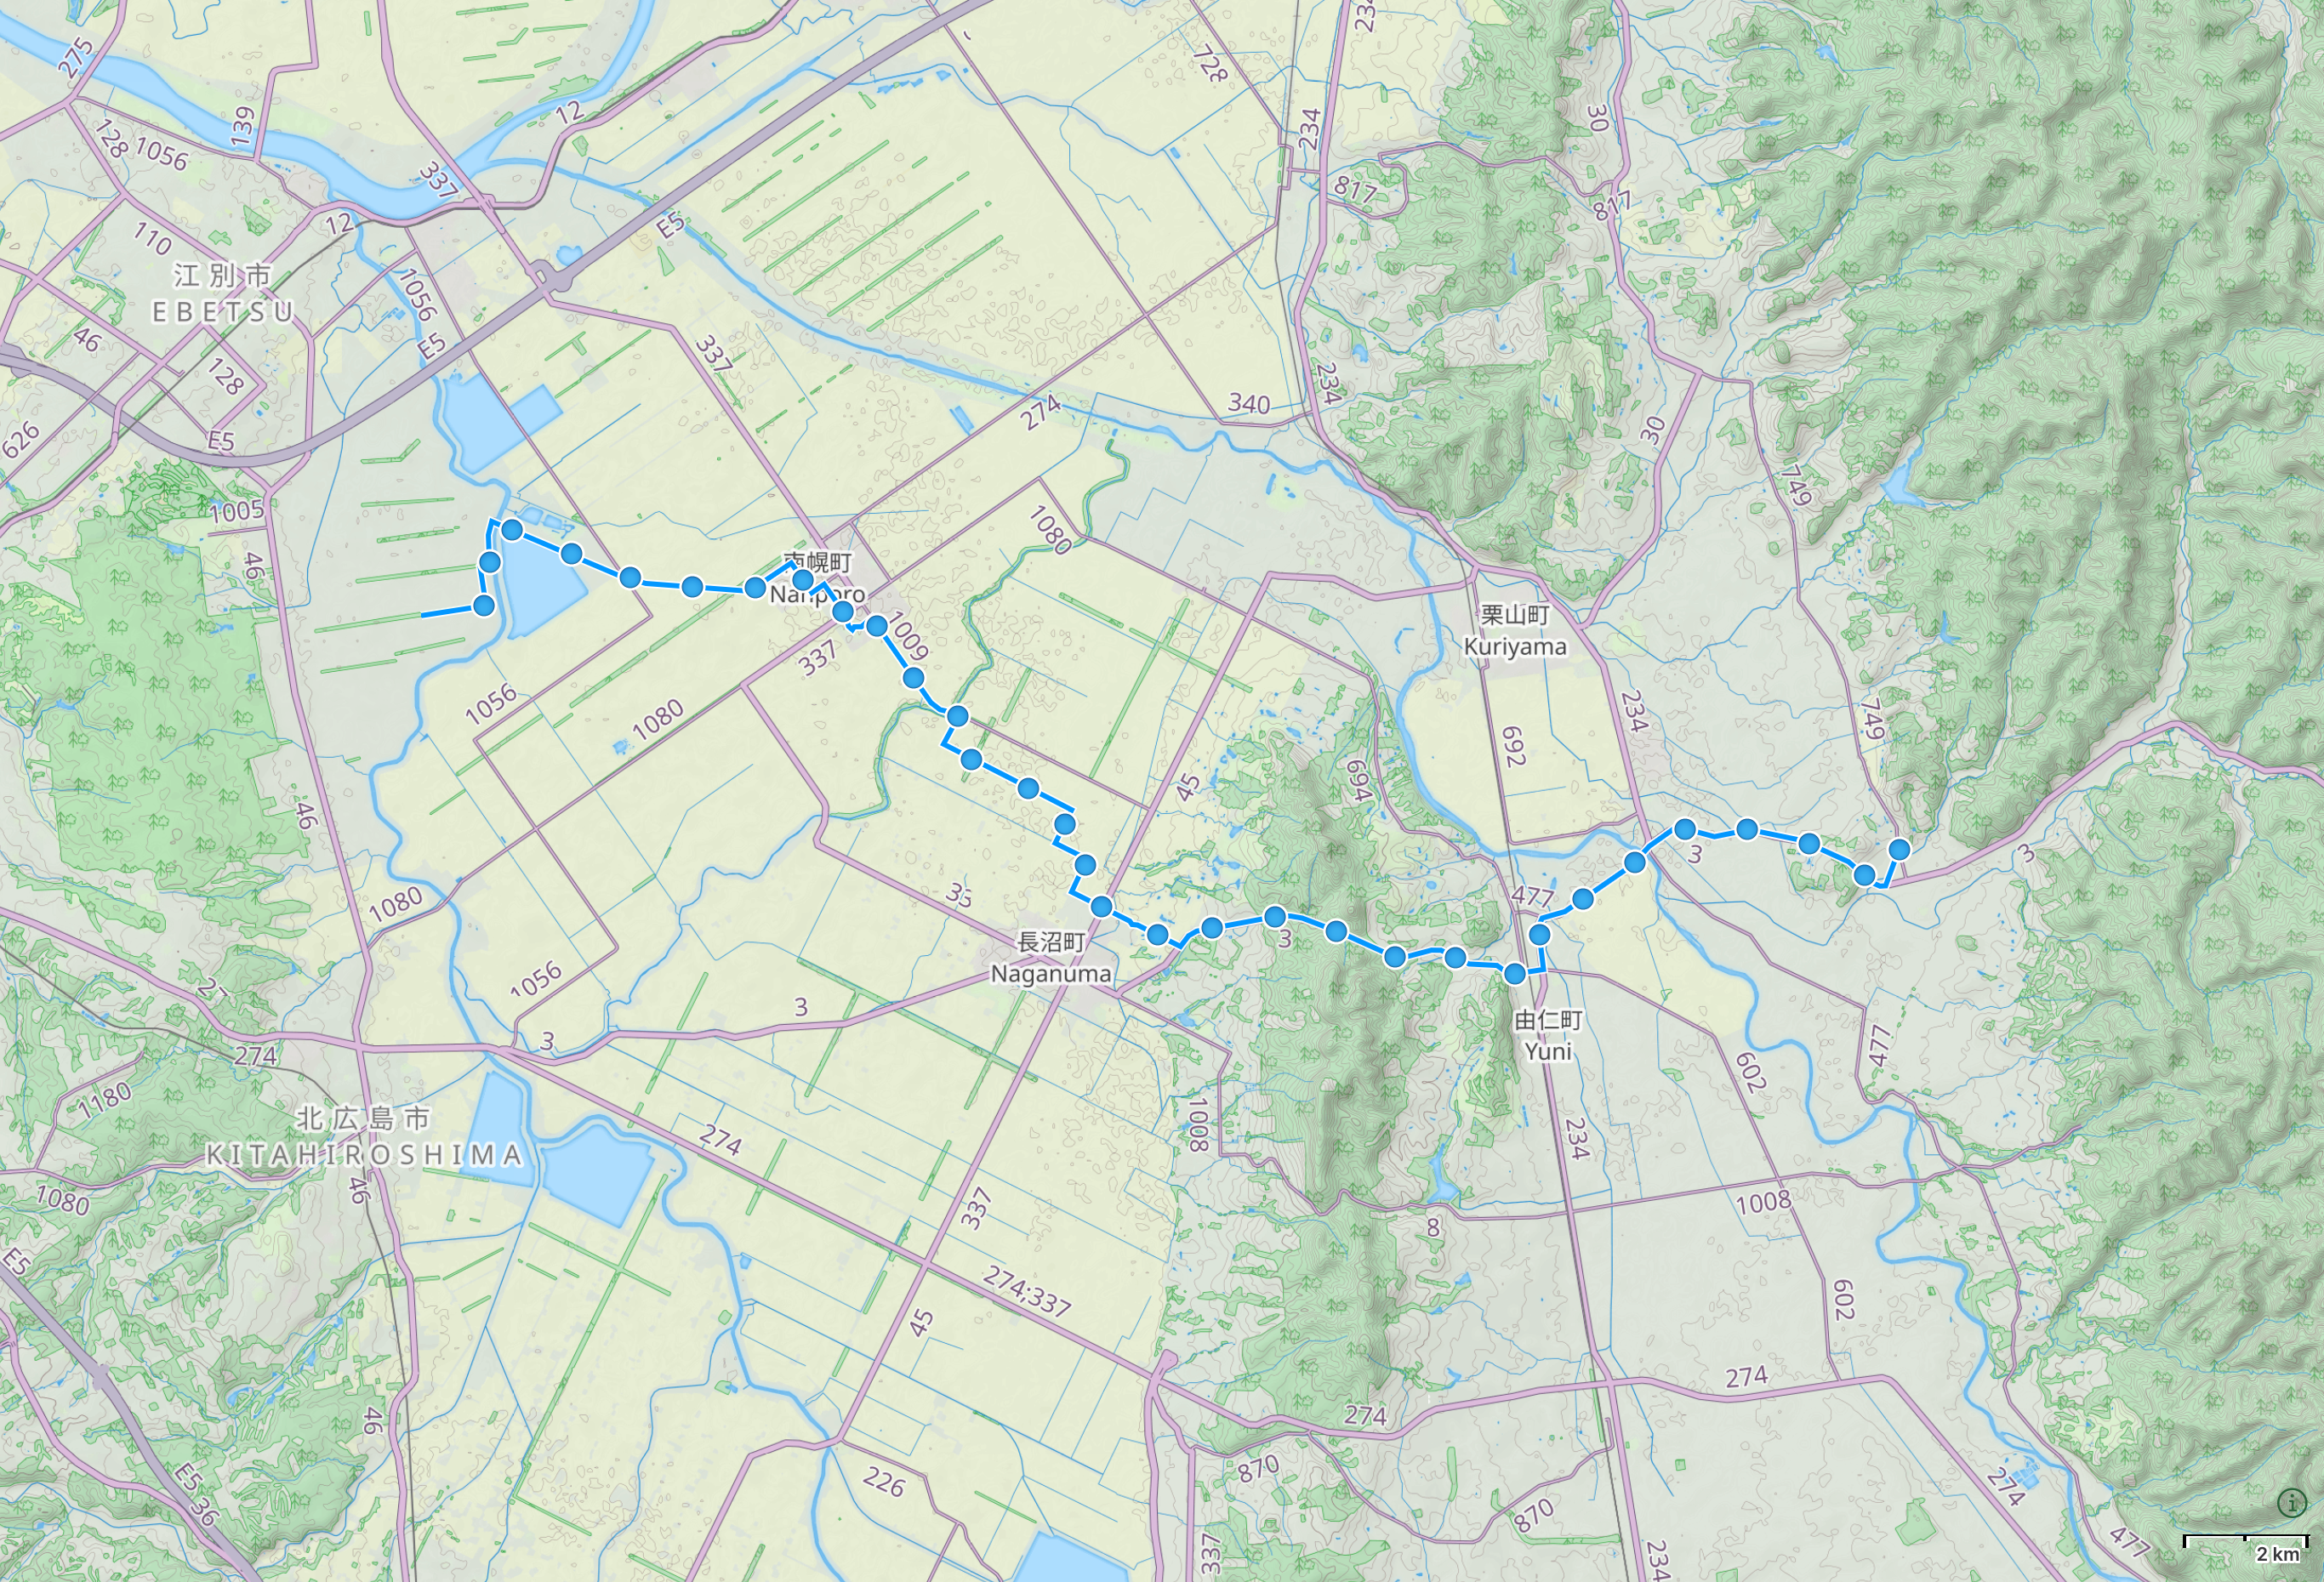 Map of Hokkaido with author’s route from Nopporo, Ebetsu to Kuriyama highlighted.